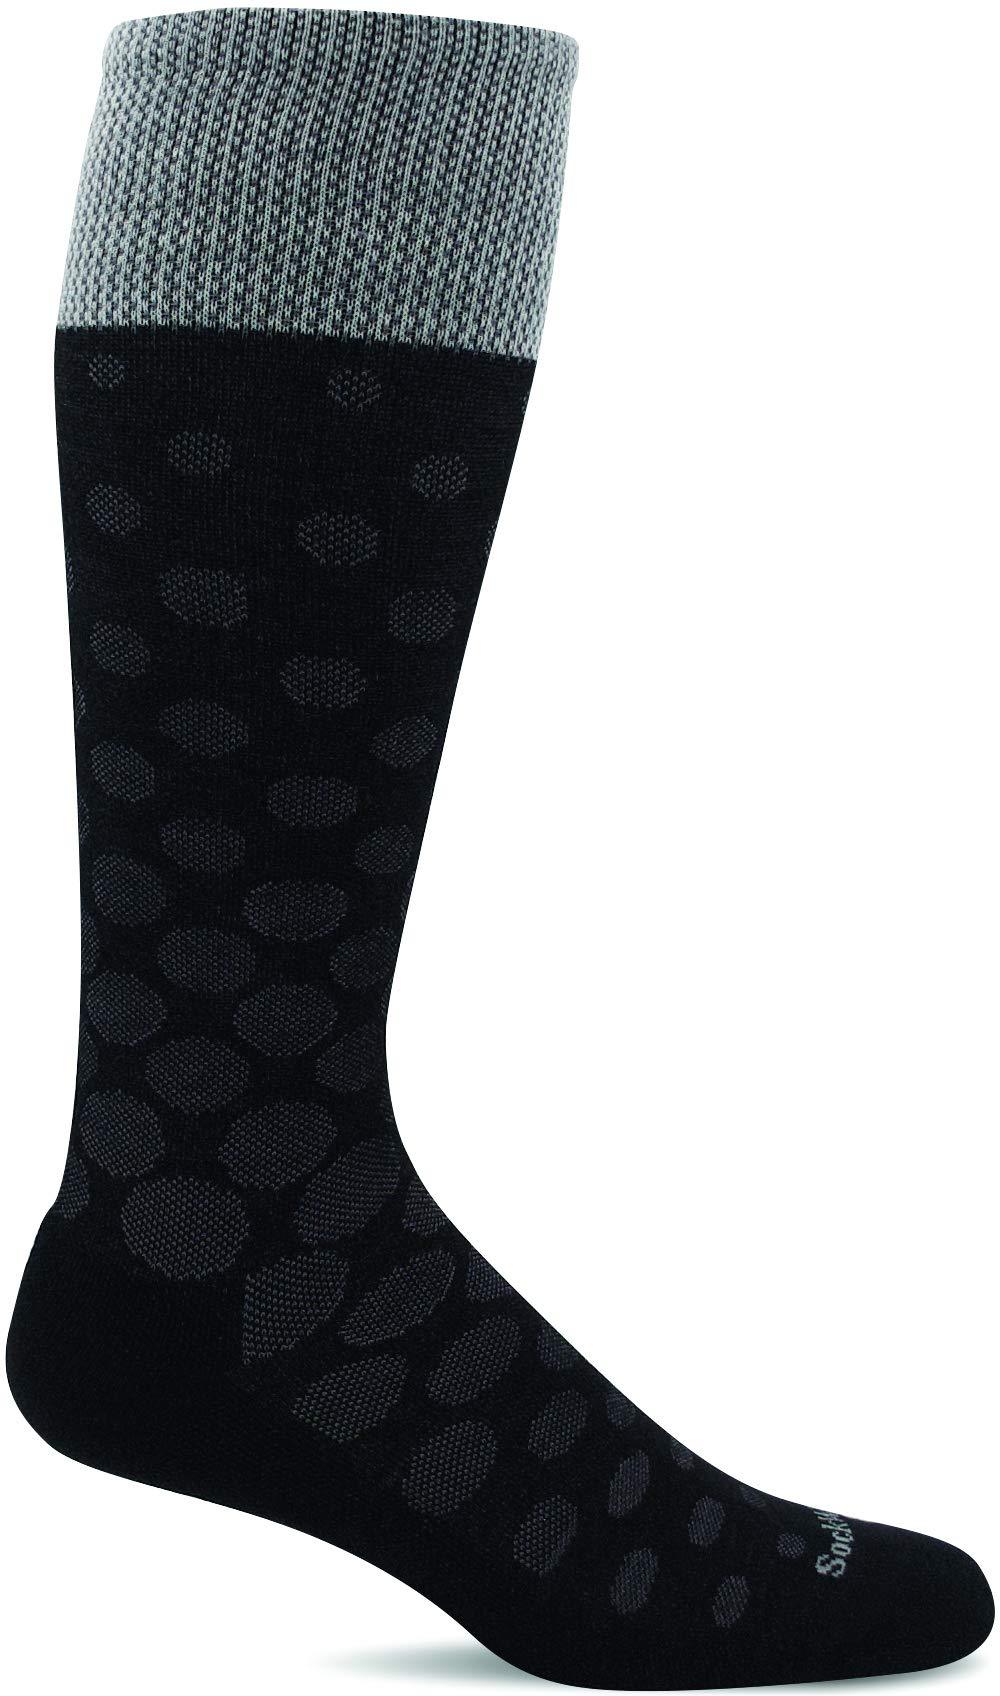 [AUSTRALIA] - Sockwell Women's Spot On Moderate Graduated Compression Sock Black Medium / Large 